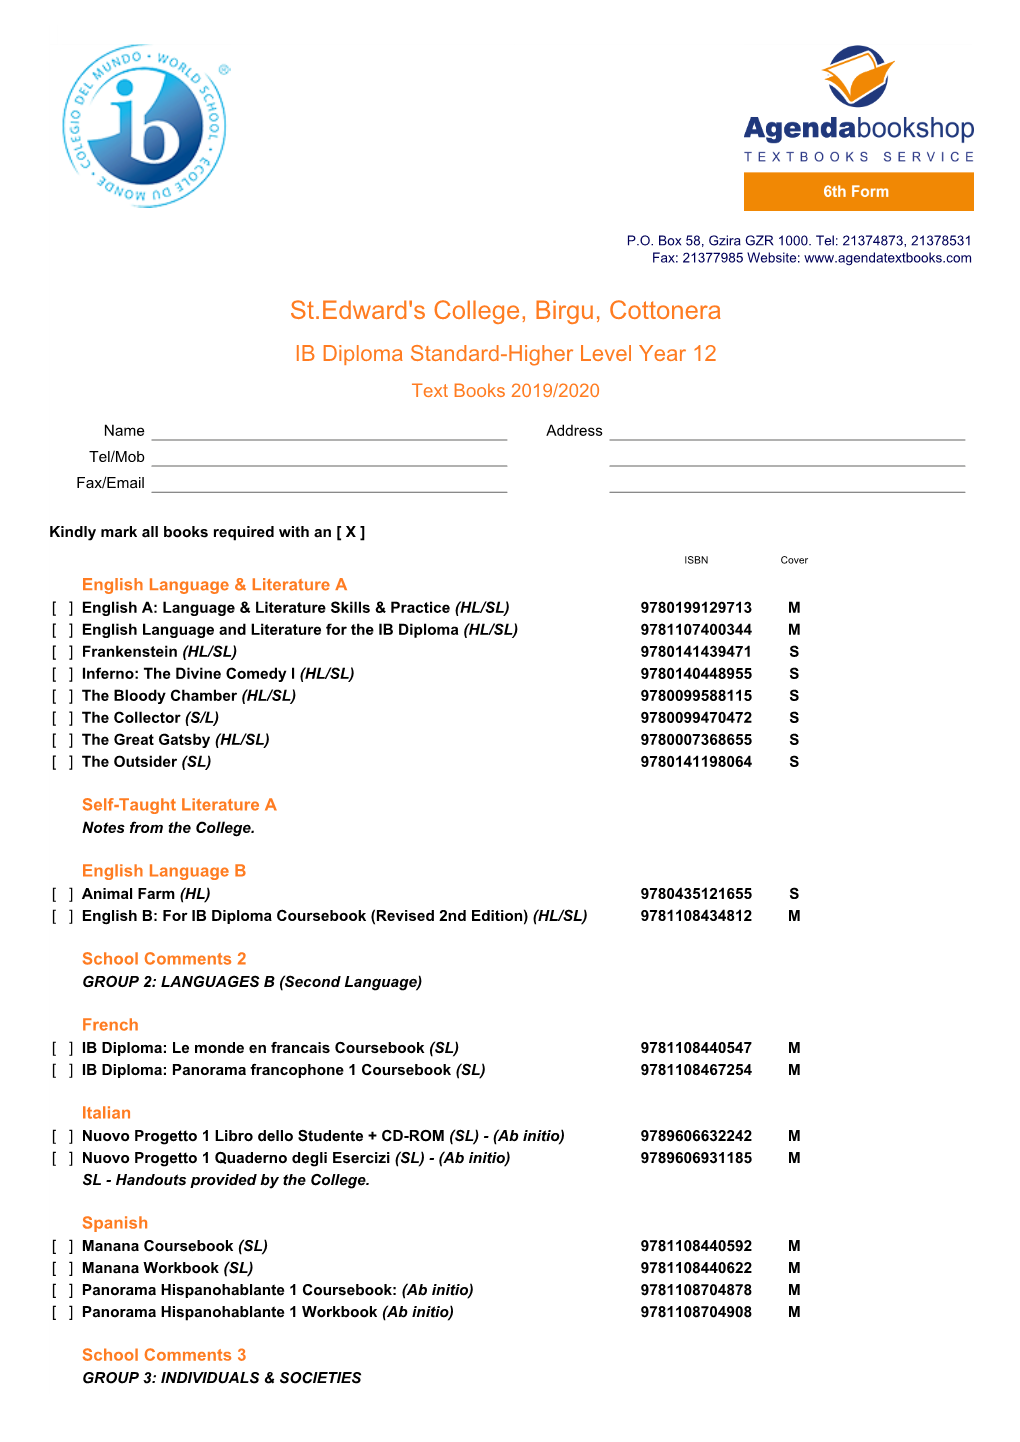 St.Edward's College, Birgu, Cottonera IB Diploma Standard-Higher Level Year 12 Text Books 2019/2020